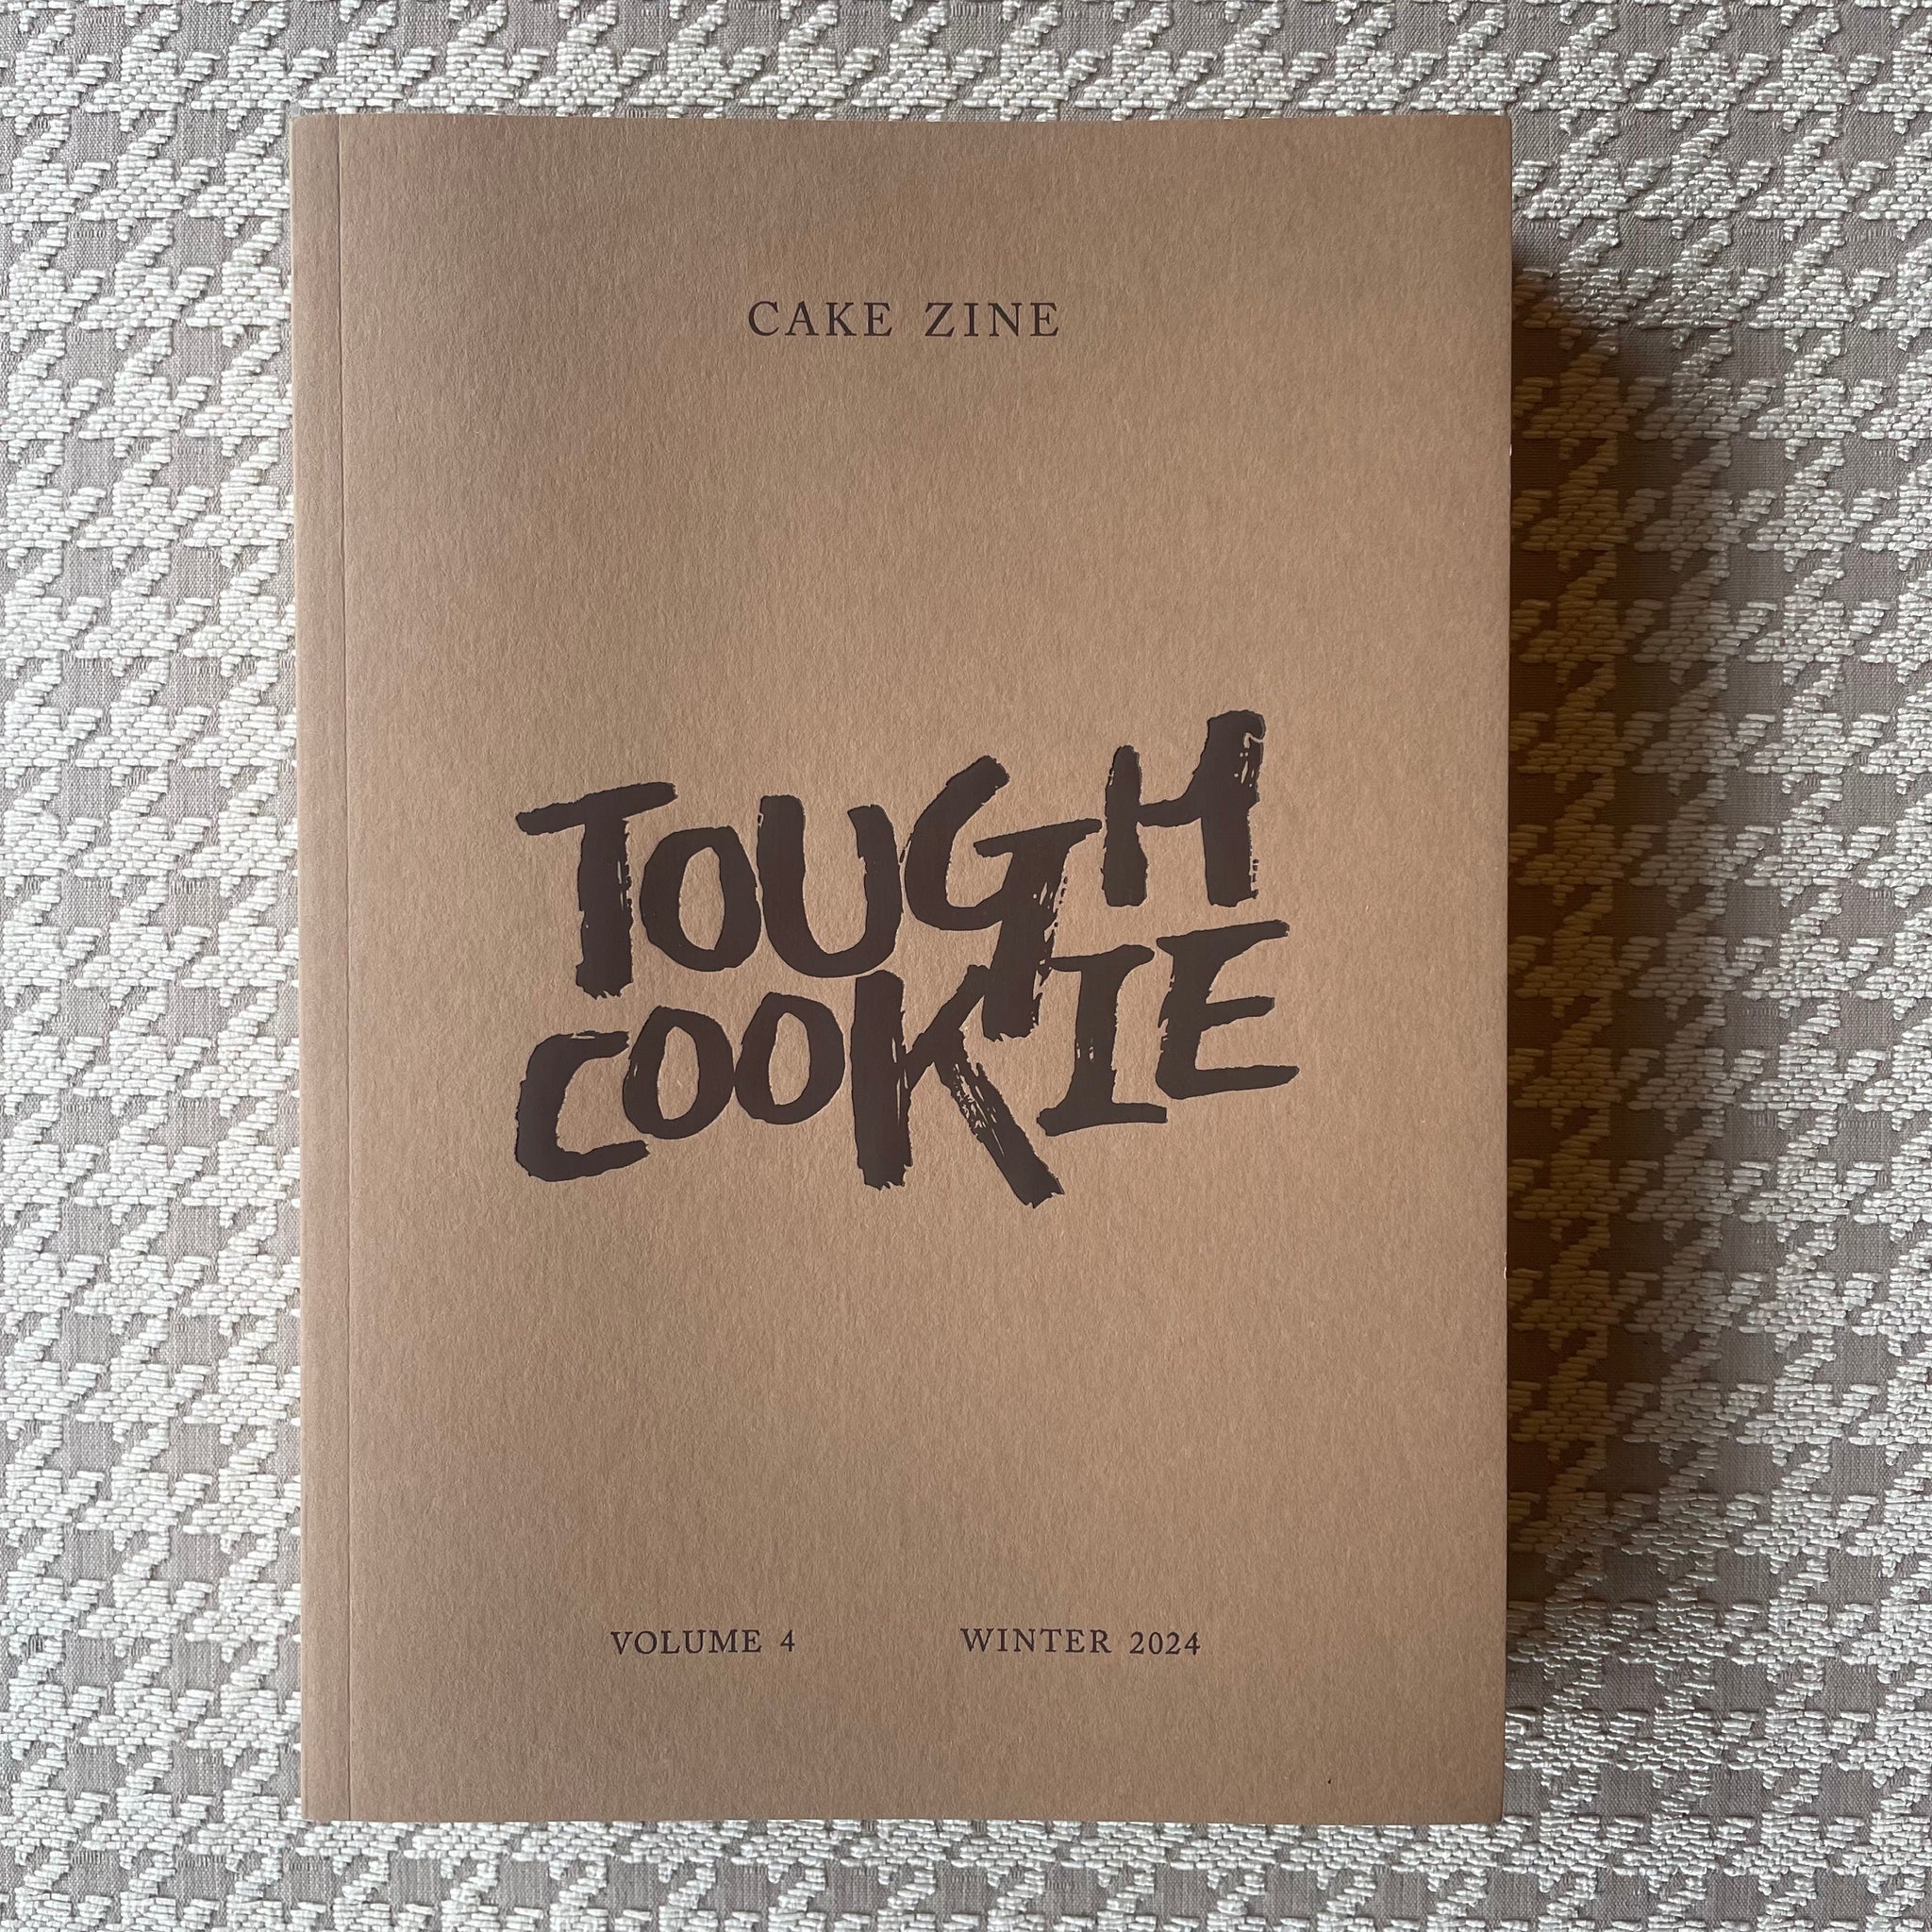 Cake Zine : Tough Cookie Books cake zine   